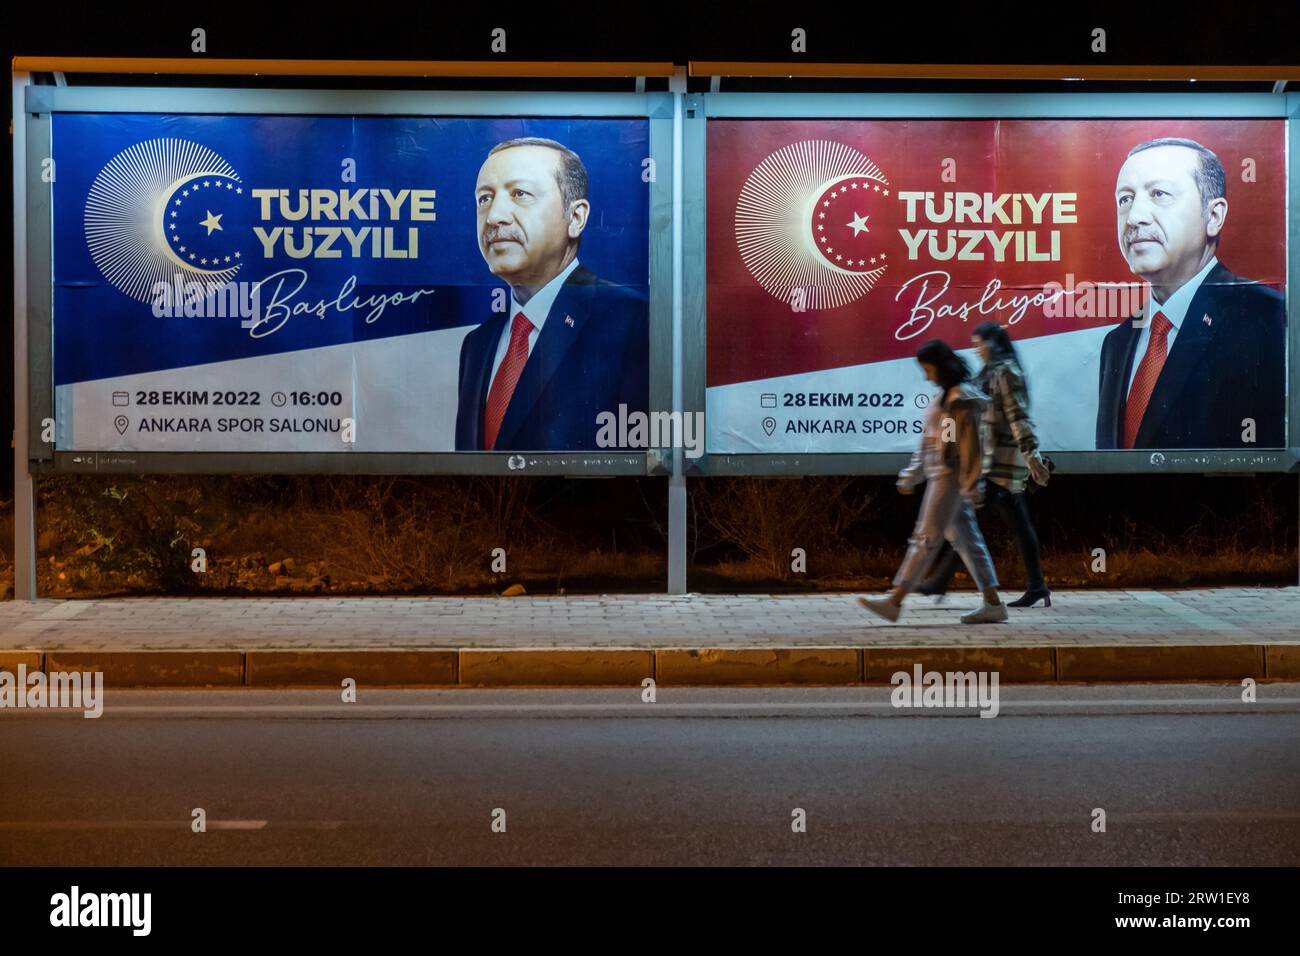 28.10.2022, Turchia, Antalya, Antalya - poster che annuncia la presenza del presidente turco Tayyip Erdogan ad Ankara. 00A221028D1470CAROEX.JPG [MODELLO Foto Stock